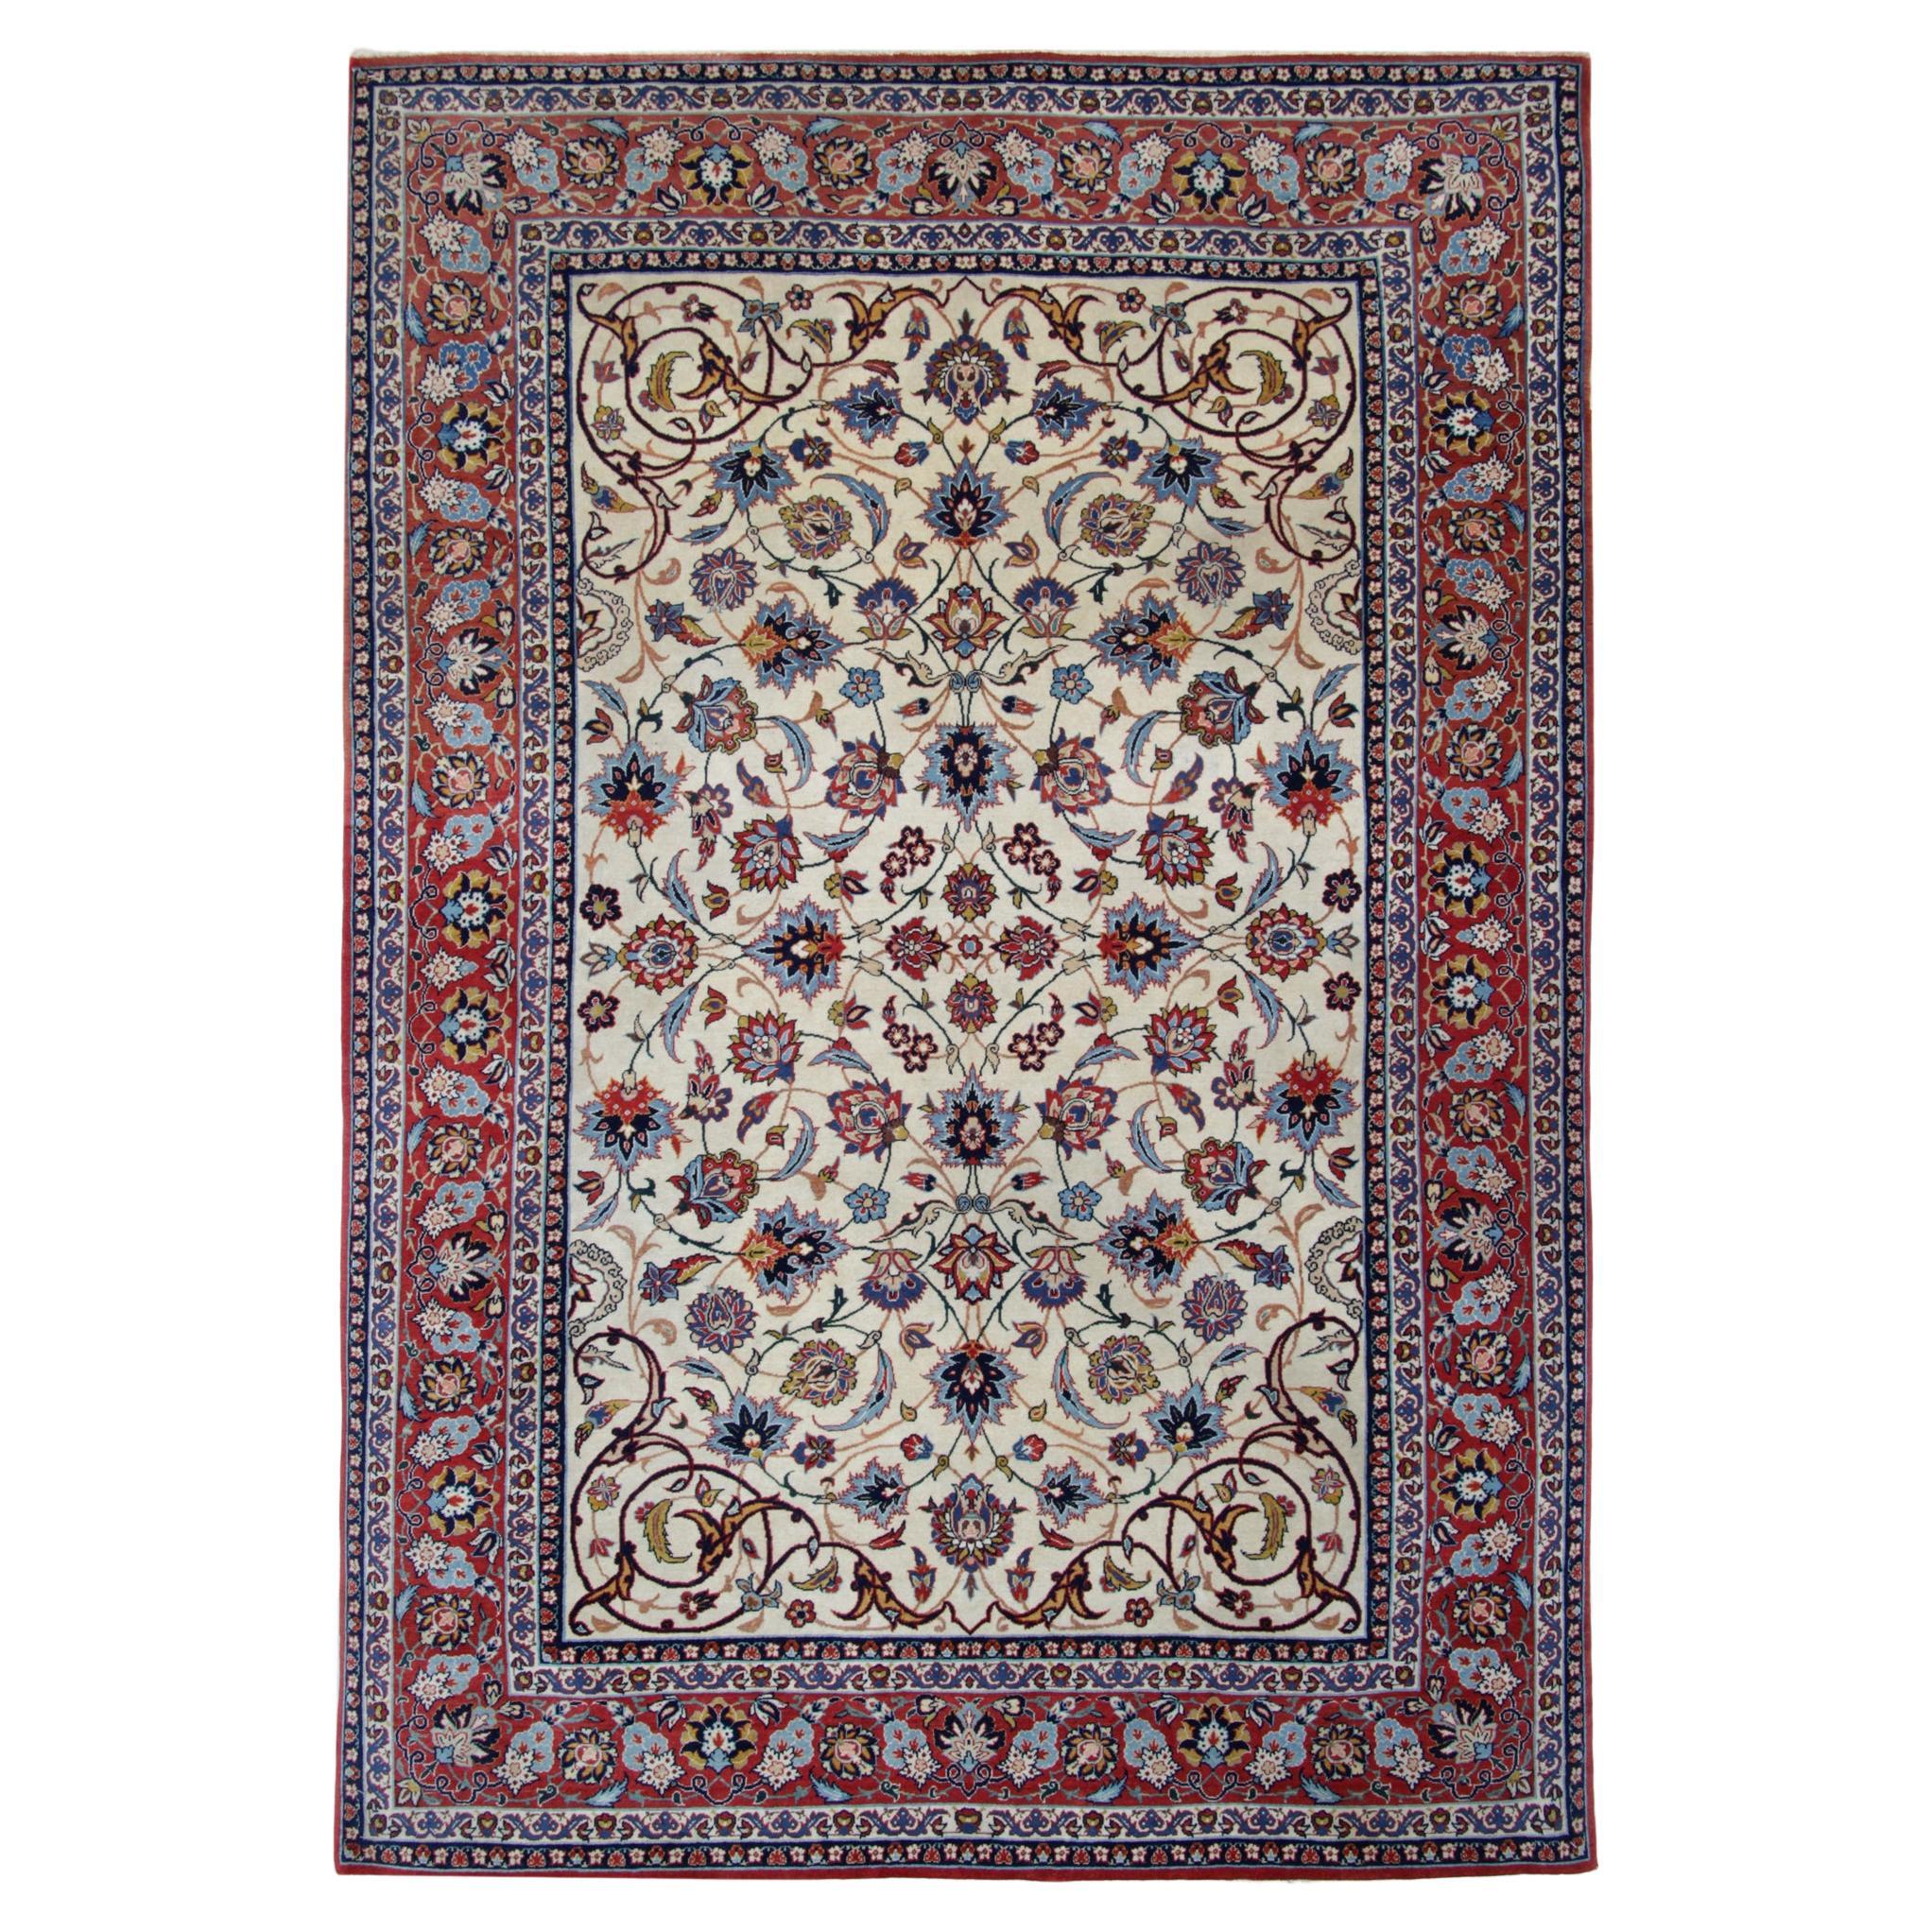 Vintage Rugs Floral Kurk Handwoven Oriental Blue Red Cream Carpet Rug 206x139cm 